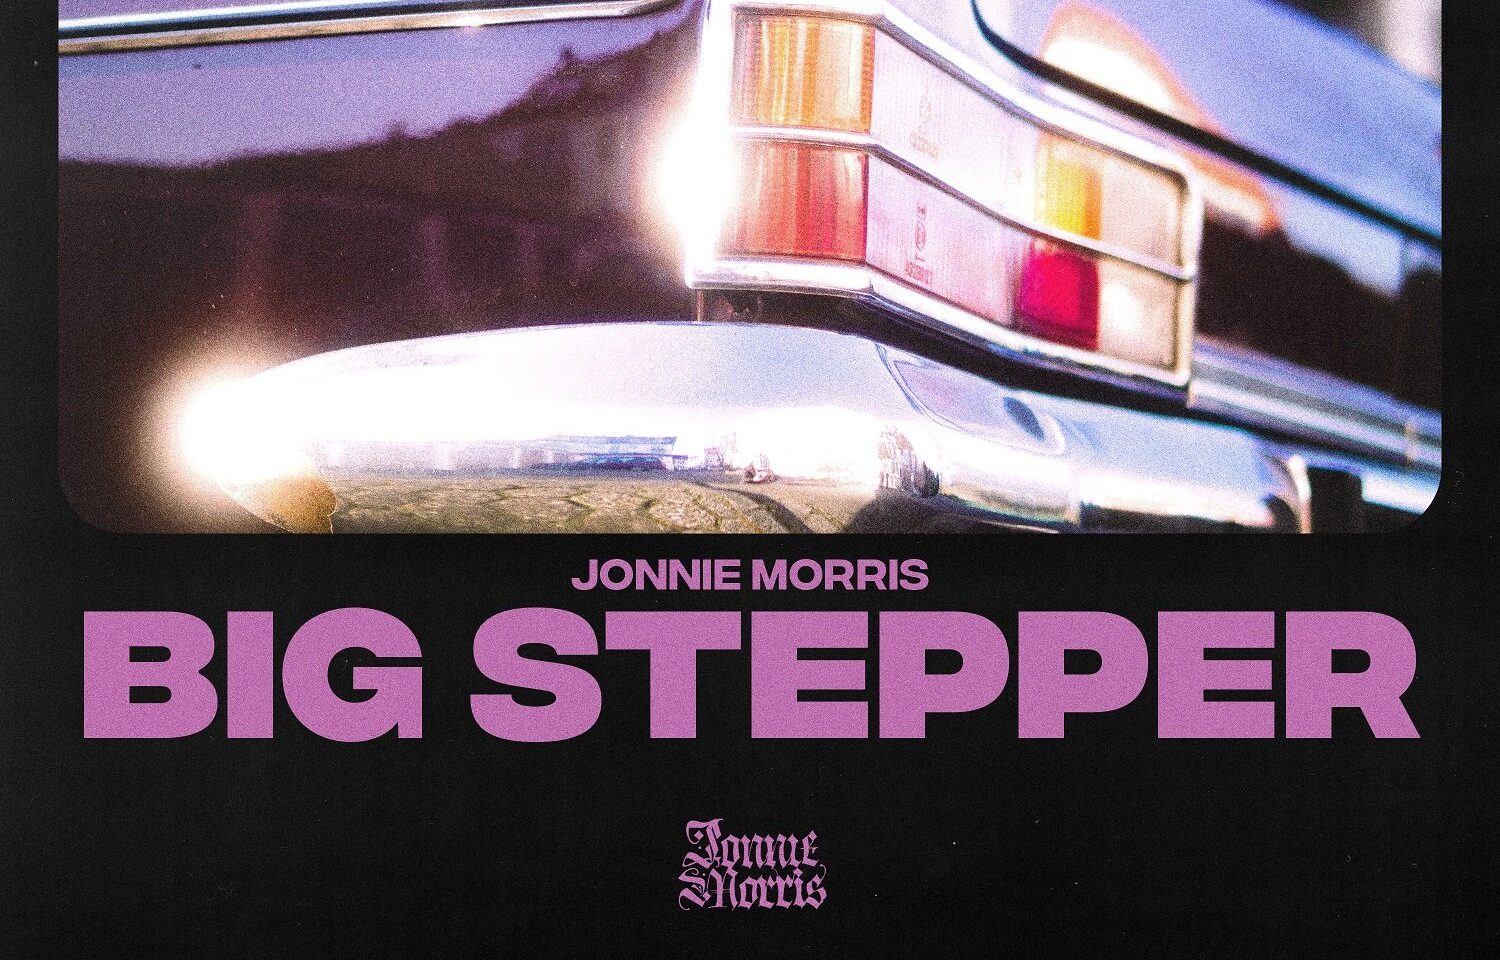 Jonnie Morris - "Big Stepper"